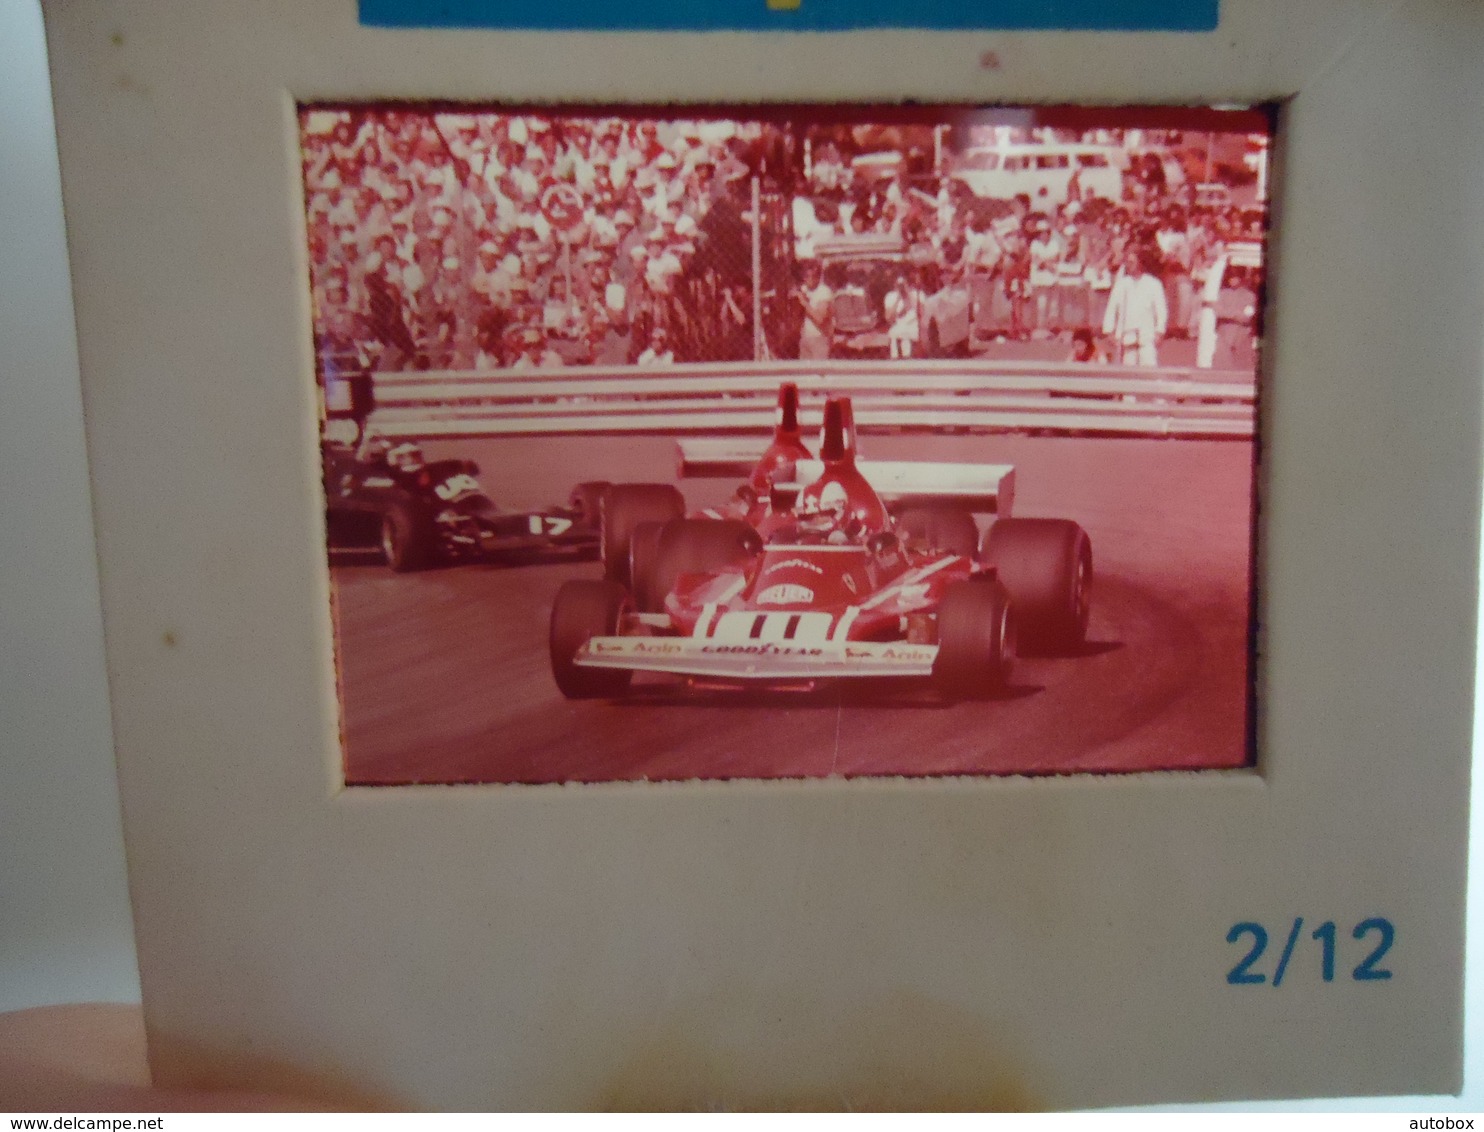 DIAPOSITIVE / SLIDE  CLAY REGAZZONI - FERRARI 312 - Grand Prix Formule 1 1974 - Diapositives (slides)